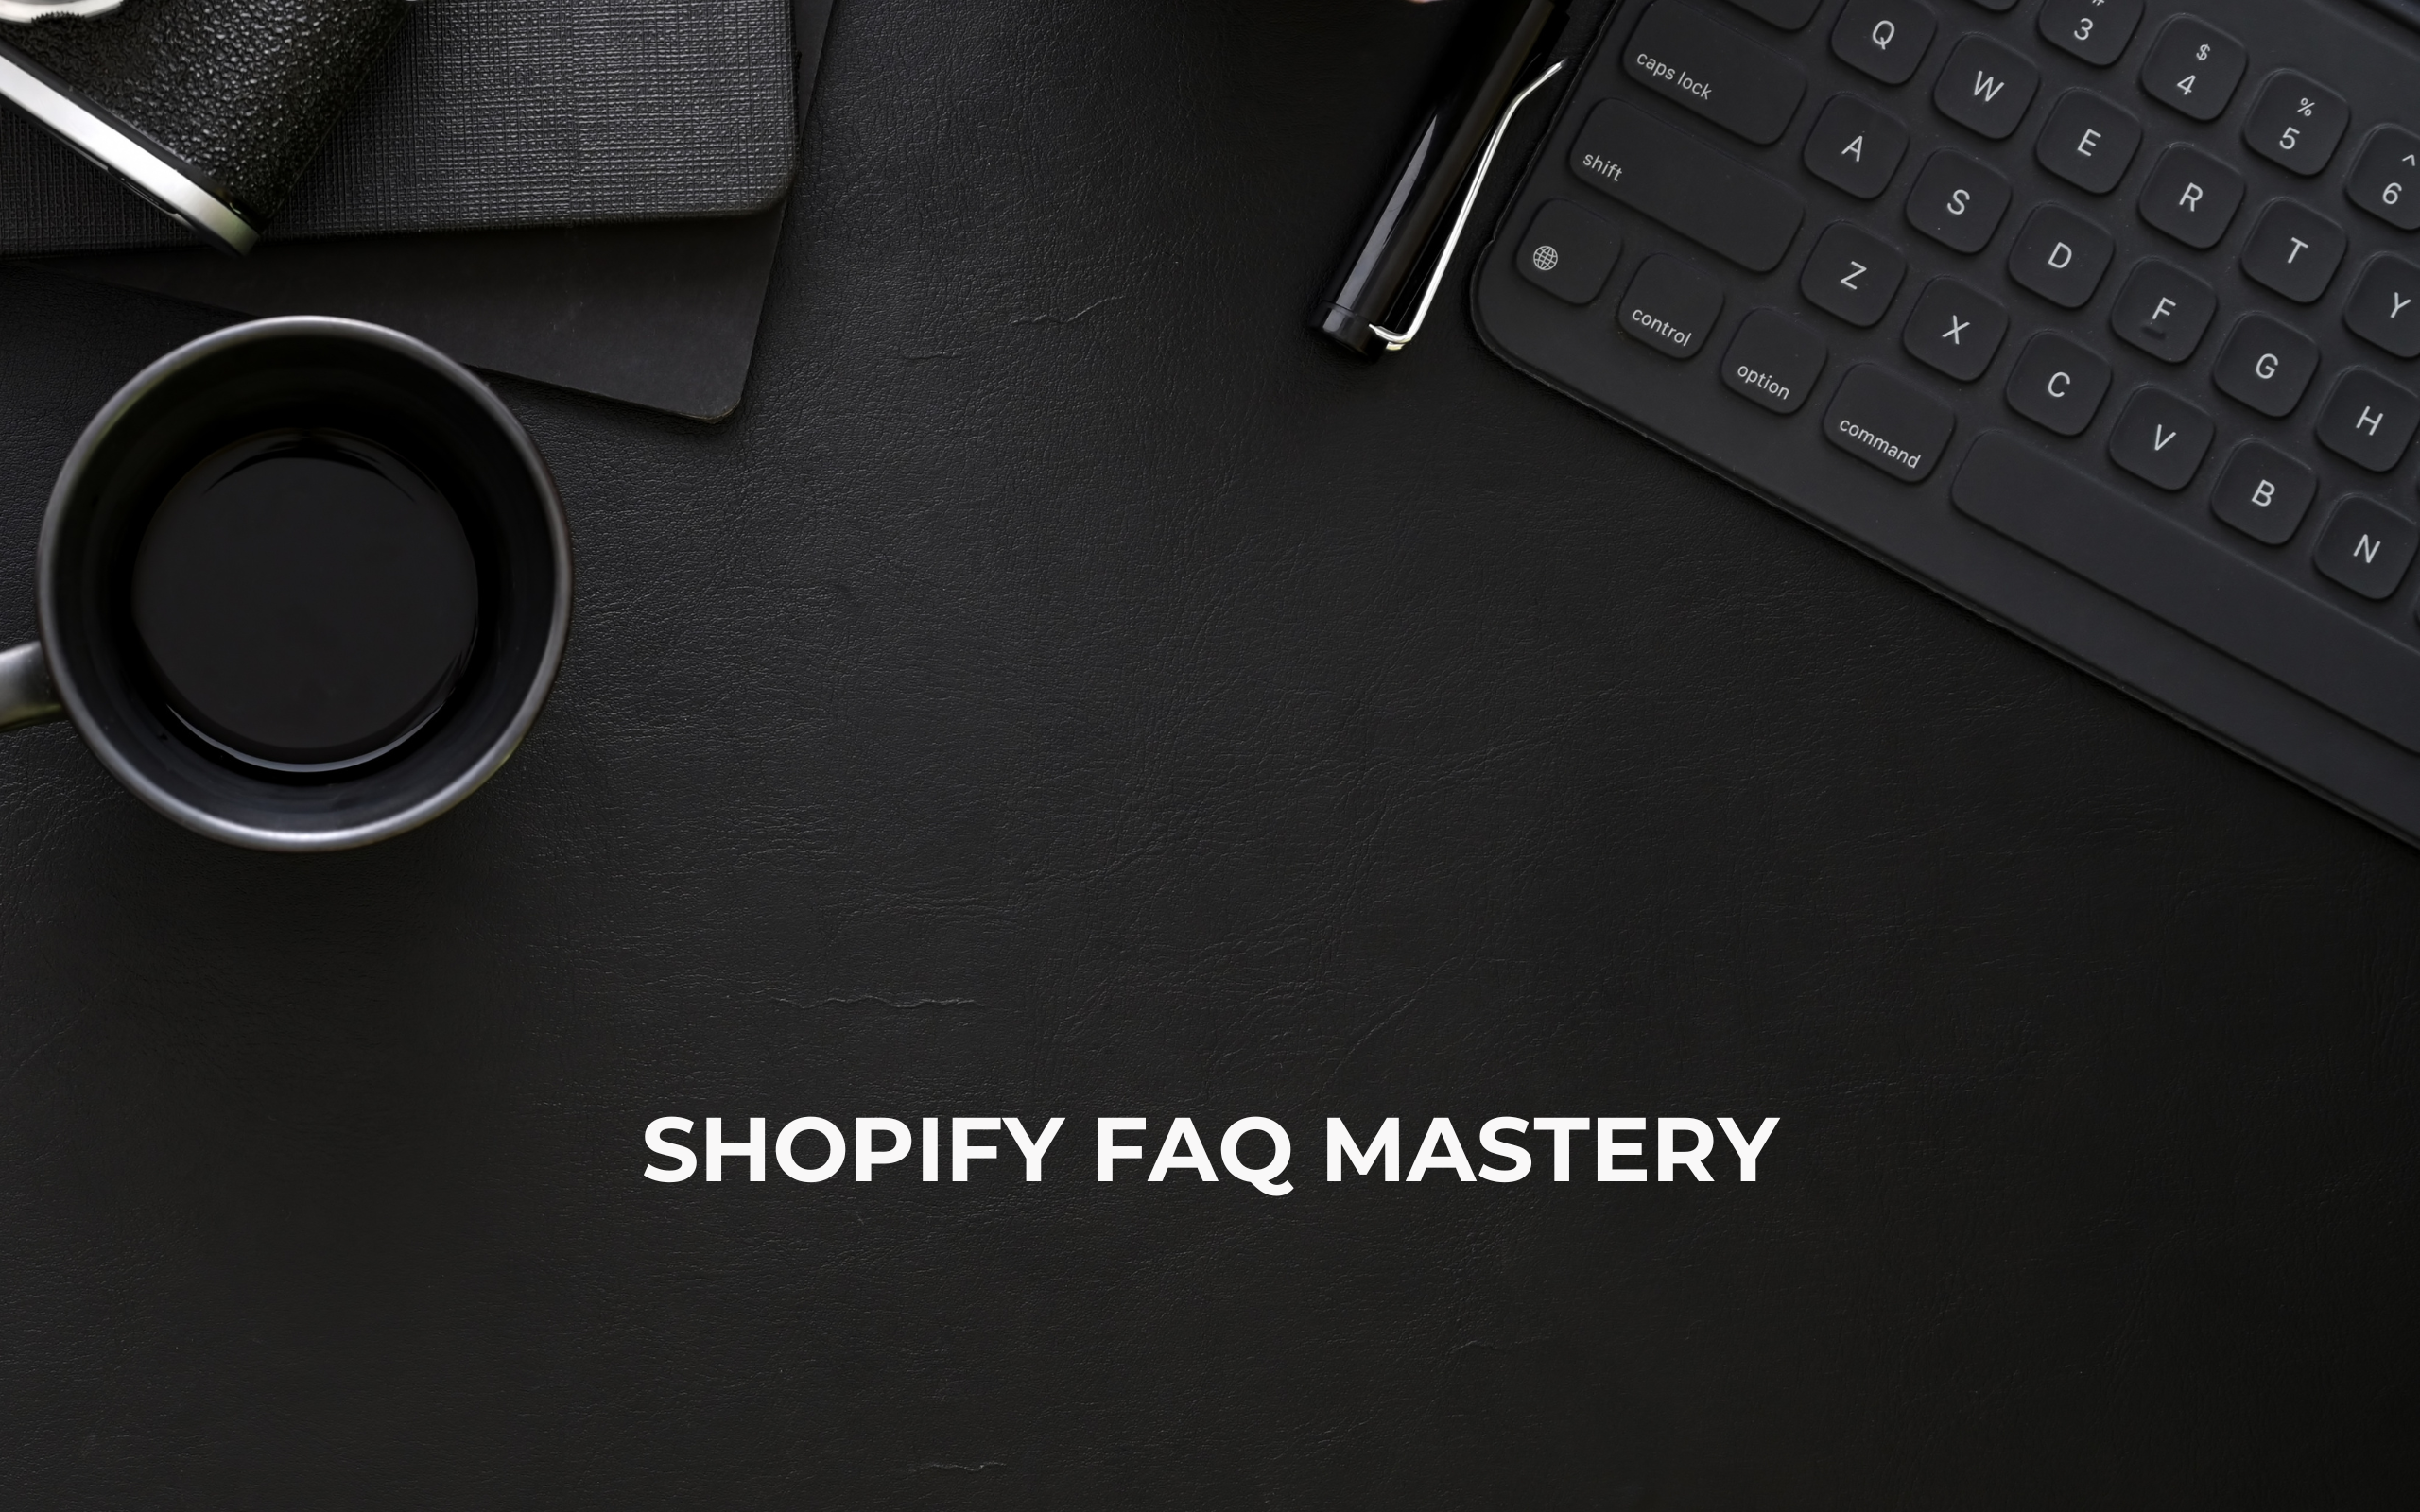 ipad keyboard, Shopify FAQ mastery, mug